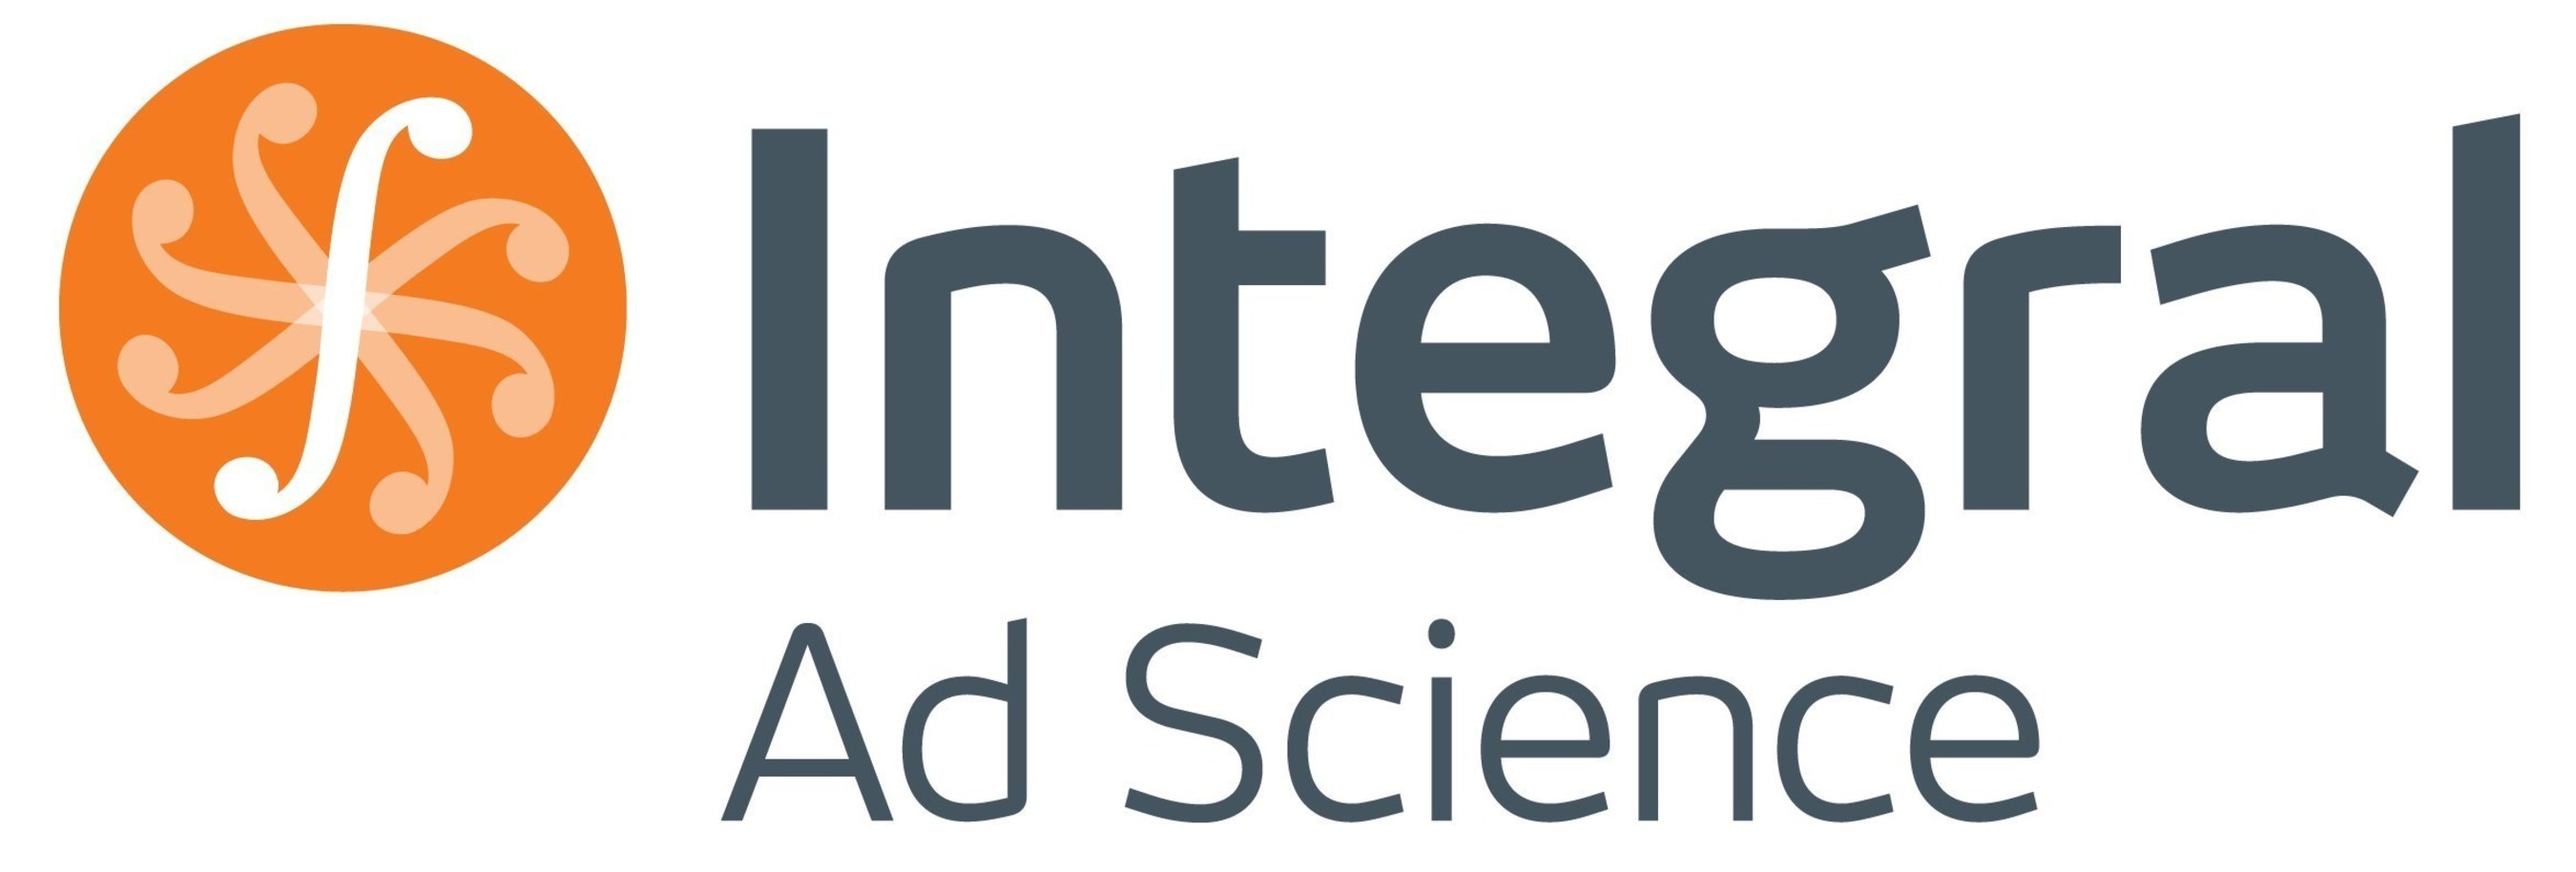 Integral Ad Science Logo.